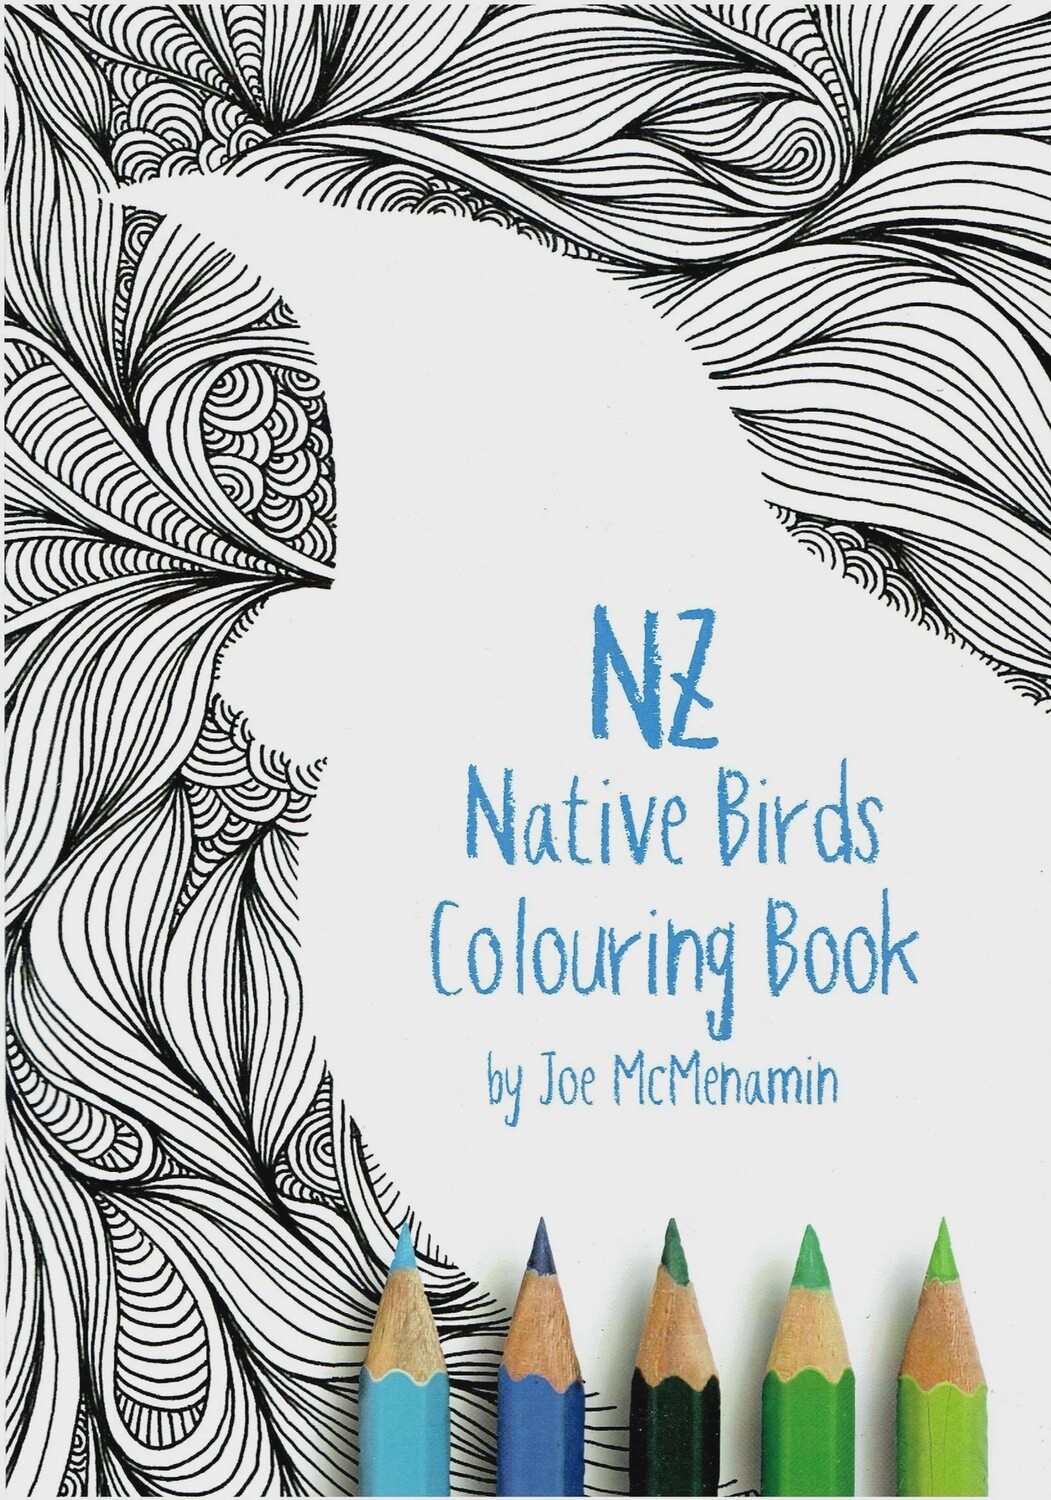 NZ Native Birds Colouring Book by Joe McMenamin